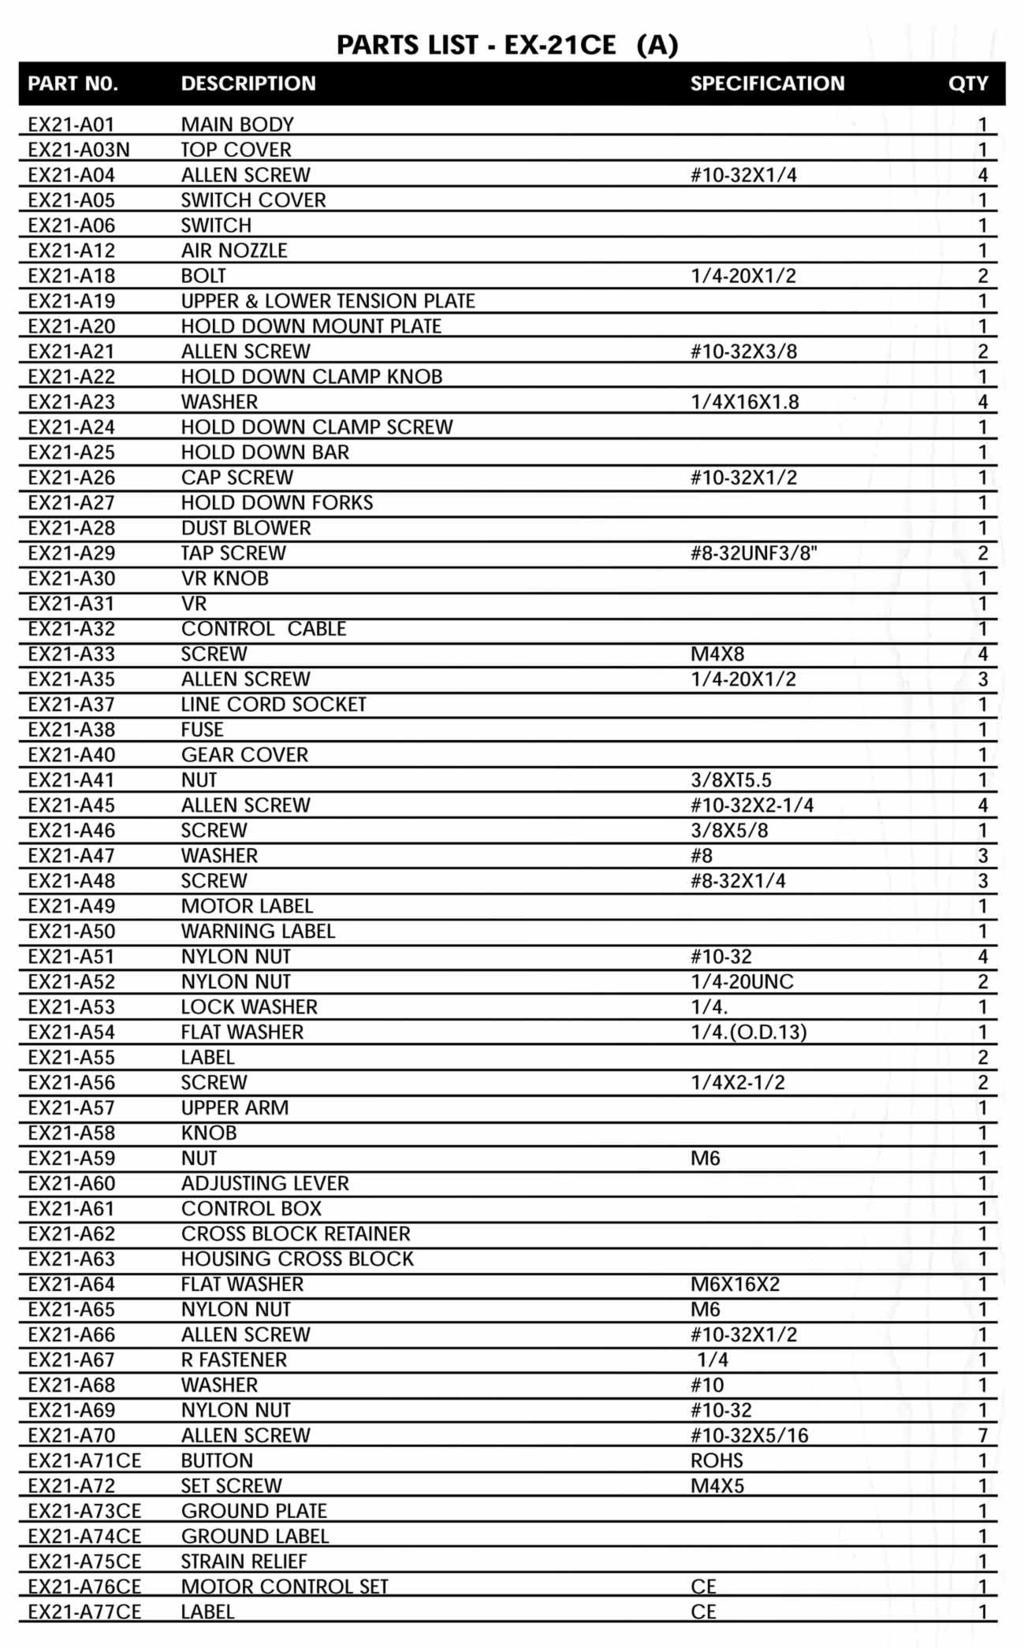 EX-21 Prts List (A).